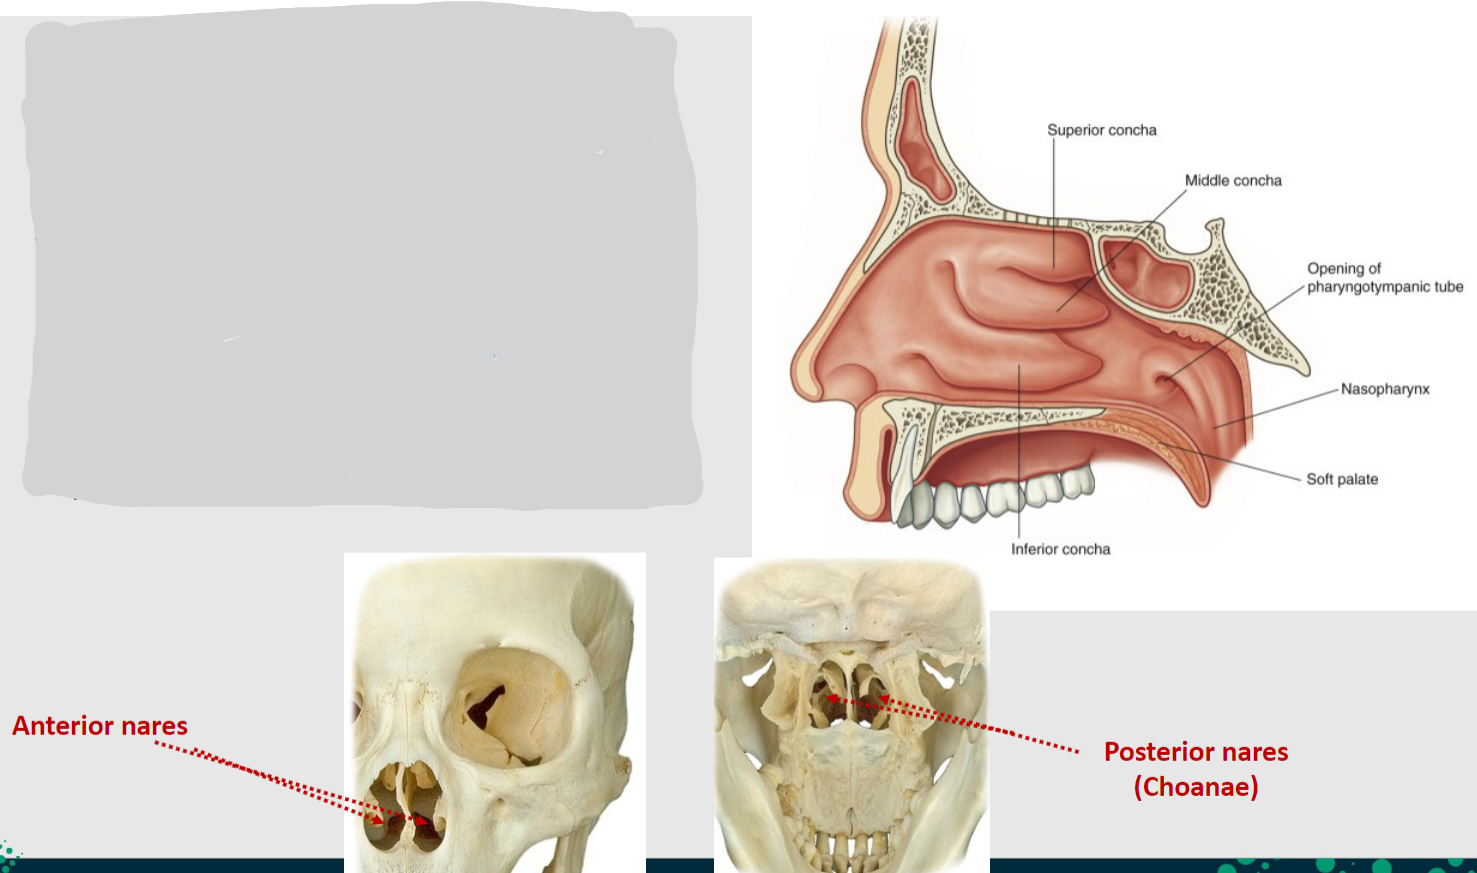 <p>The nasal cavity opens posteriorly into the nasopharynx through the choanae (posterior nares).</p>